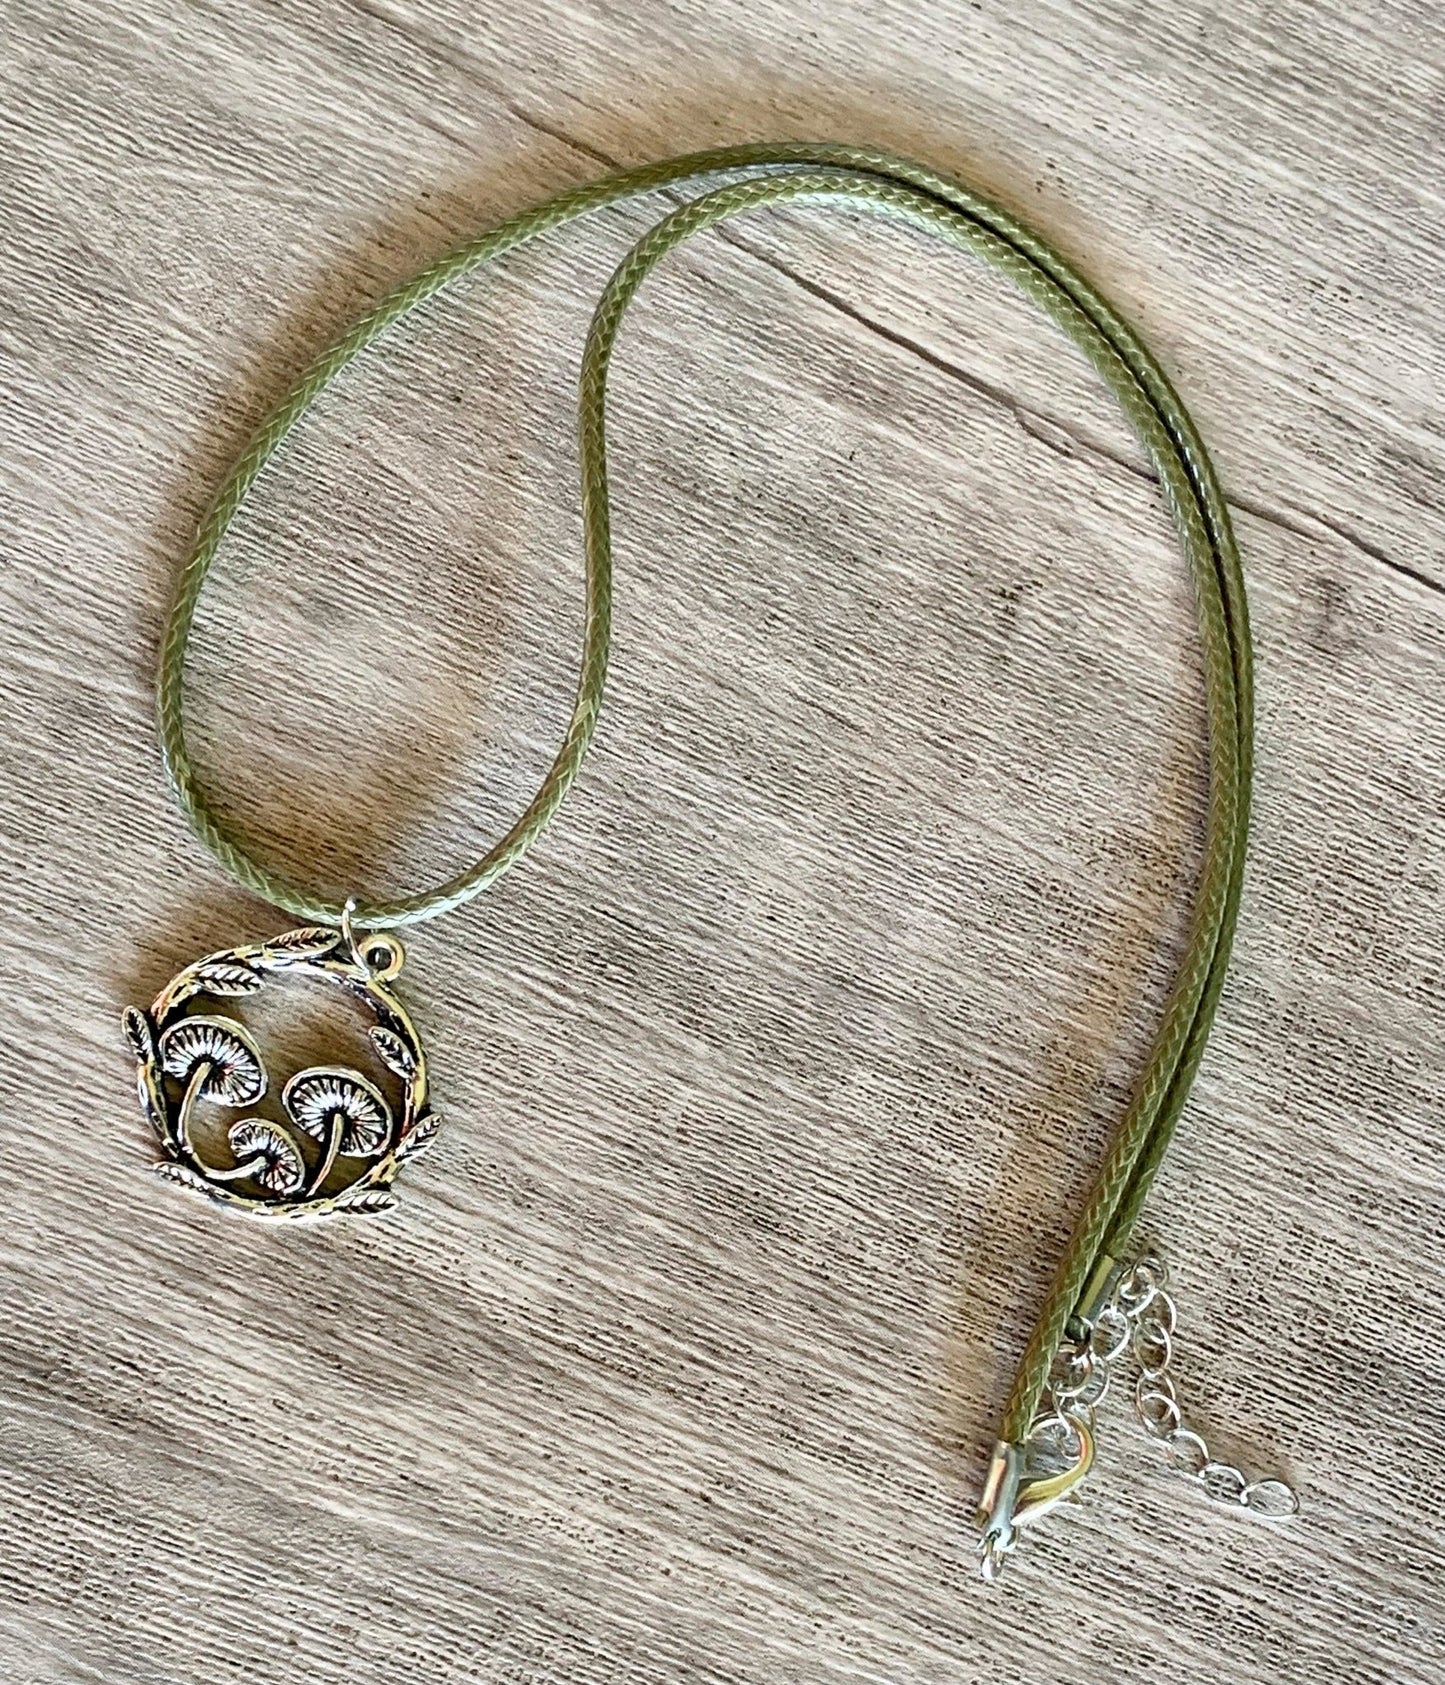 Handmade Silver Mushroom Pendant on Faux Leather Cord Necklaces - Born Mystics